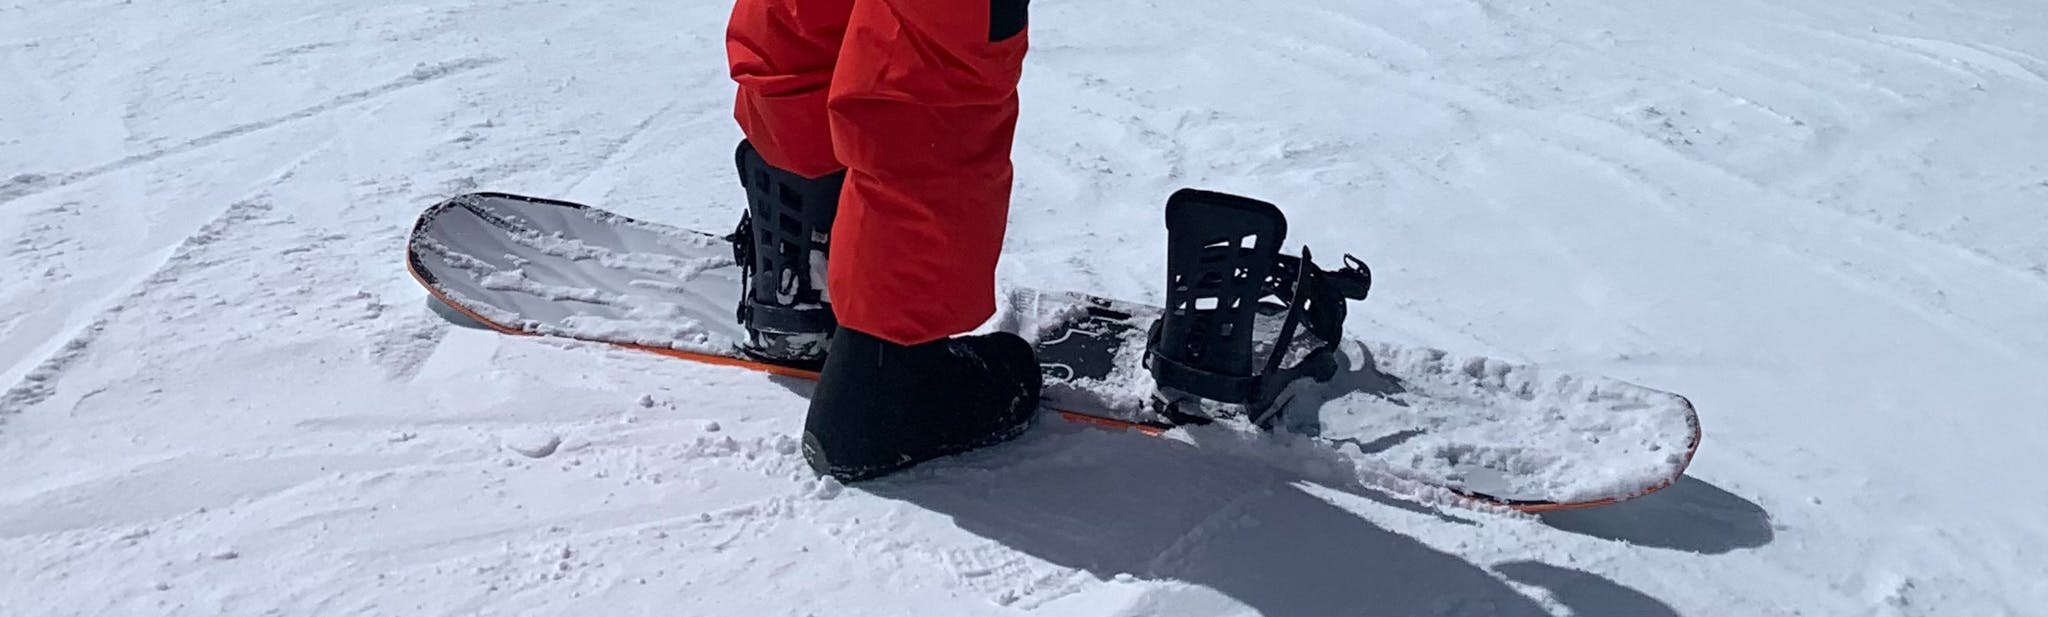 Now bindings short screws  Snowboarding Forum - Snowboard